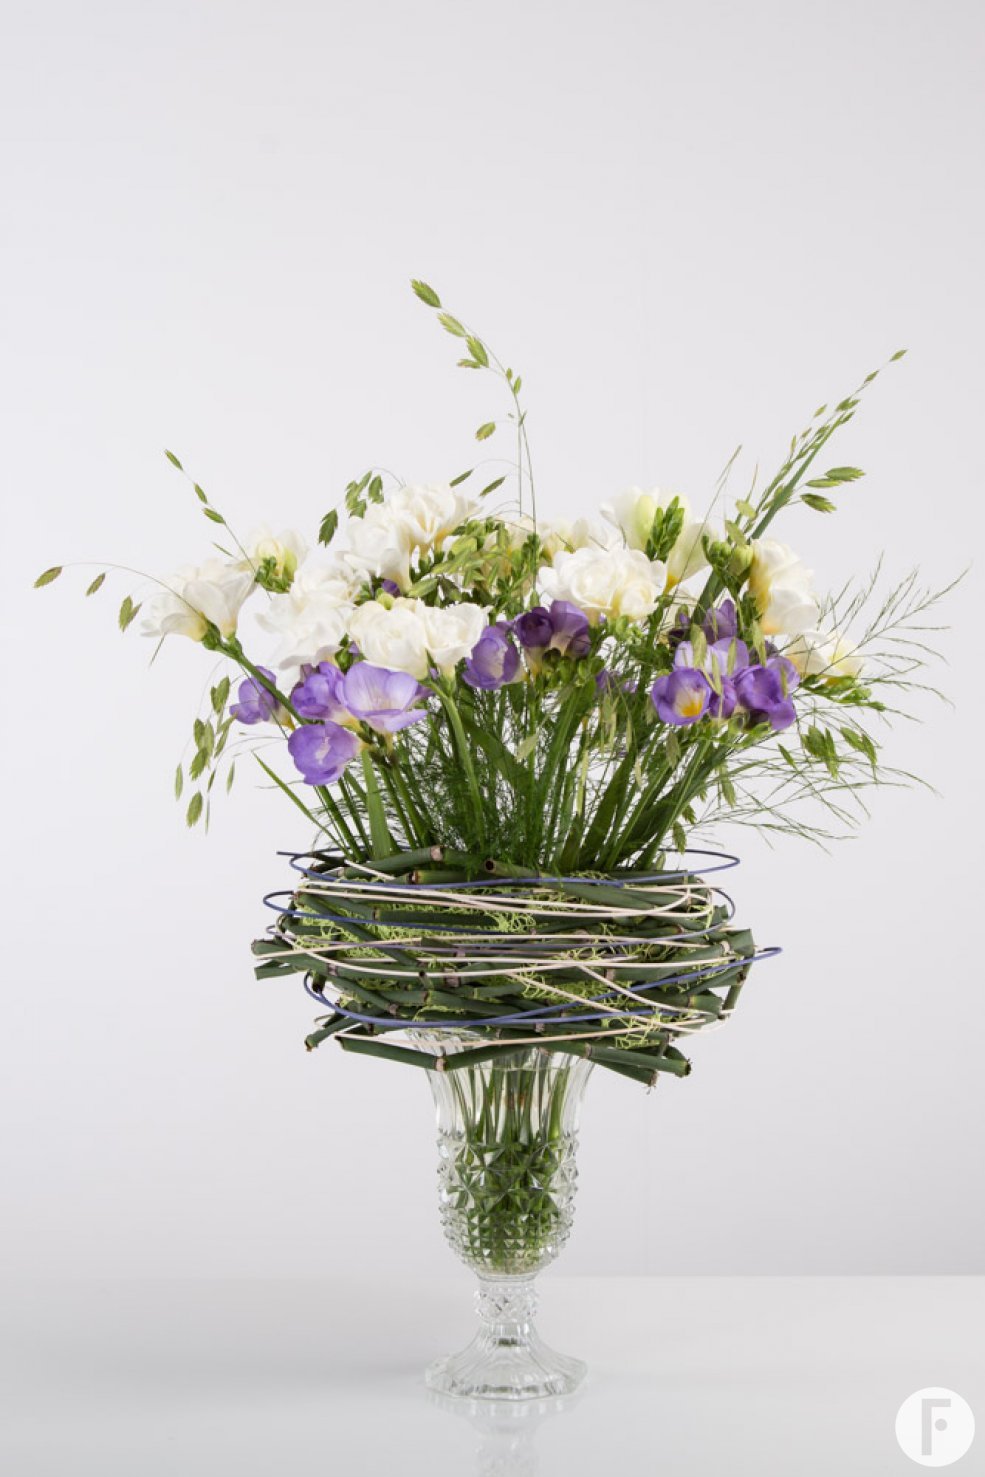 White and purple Freesia bouquet